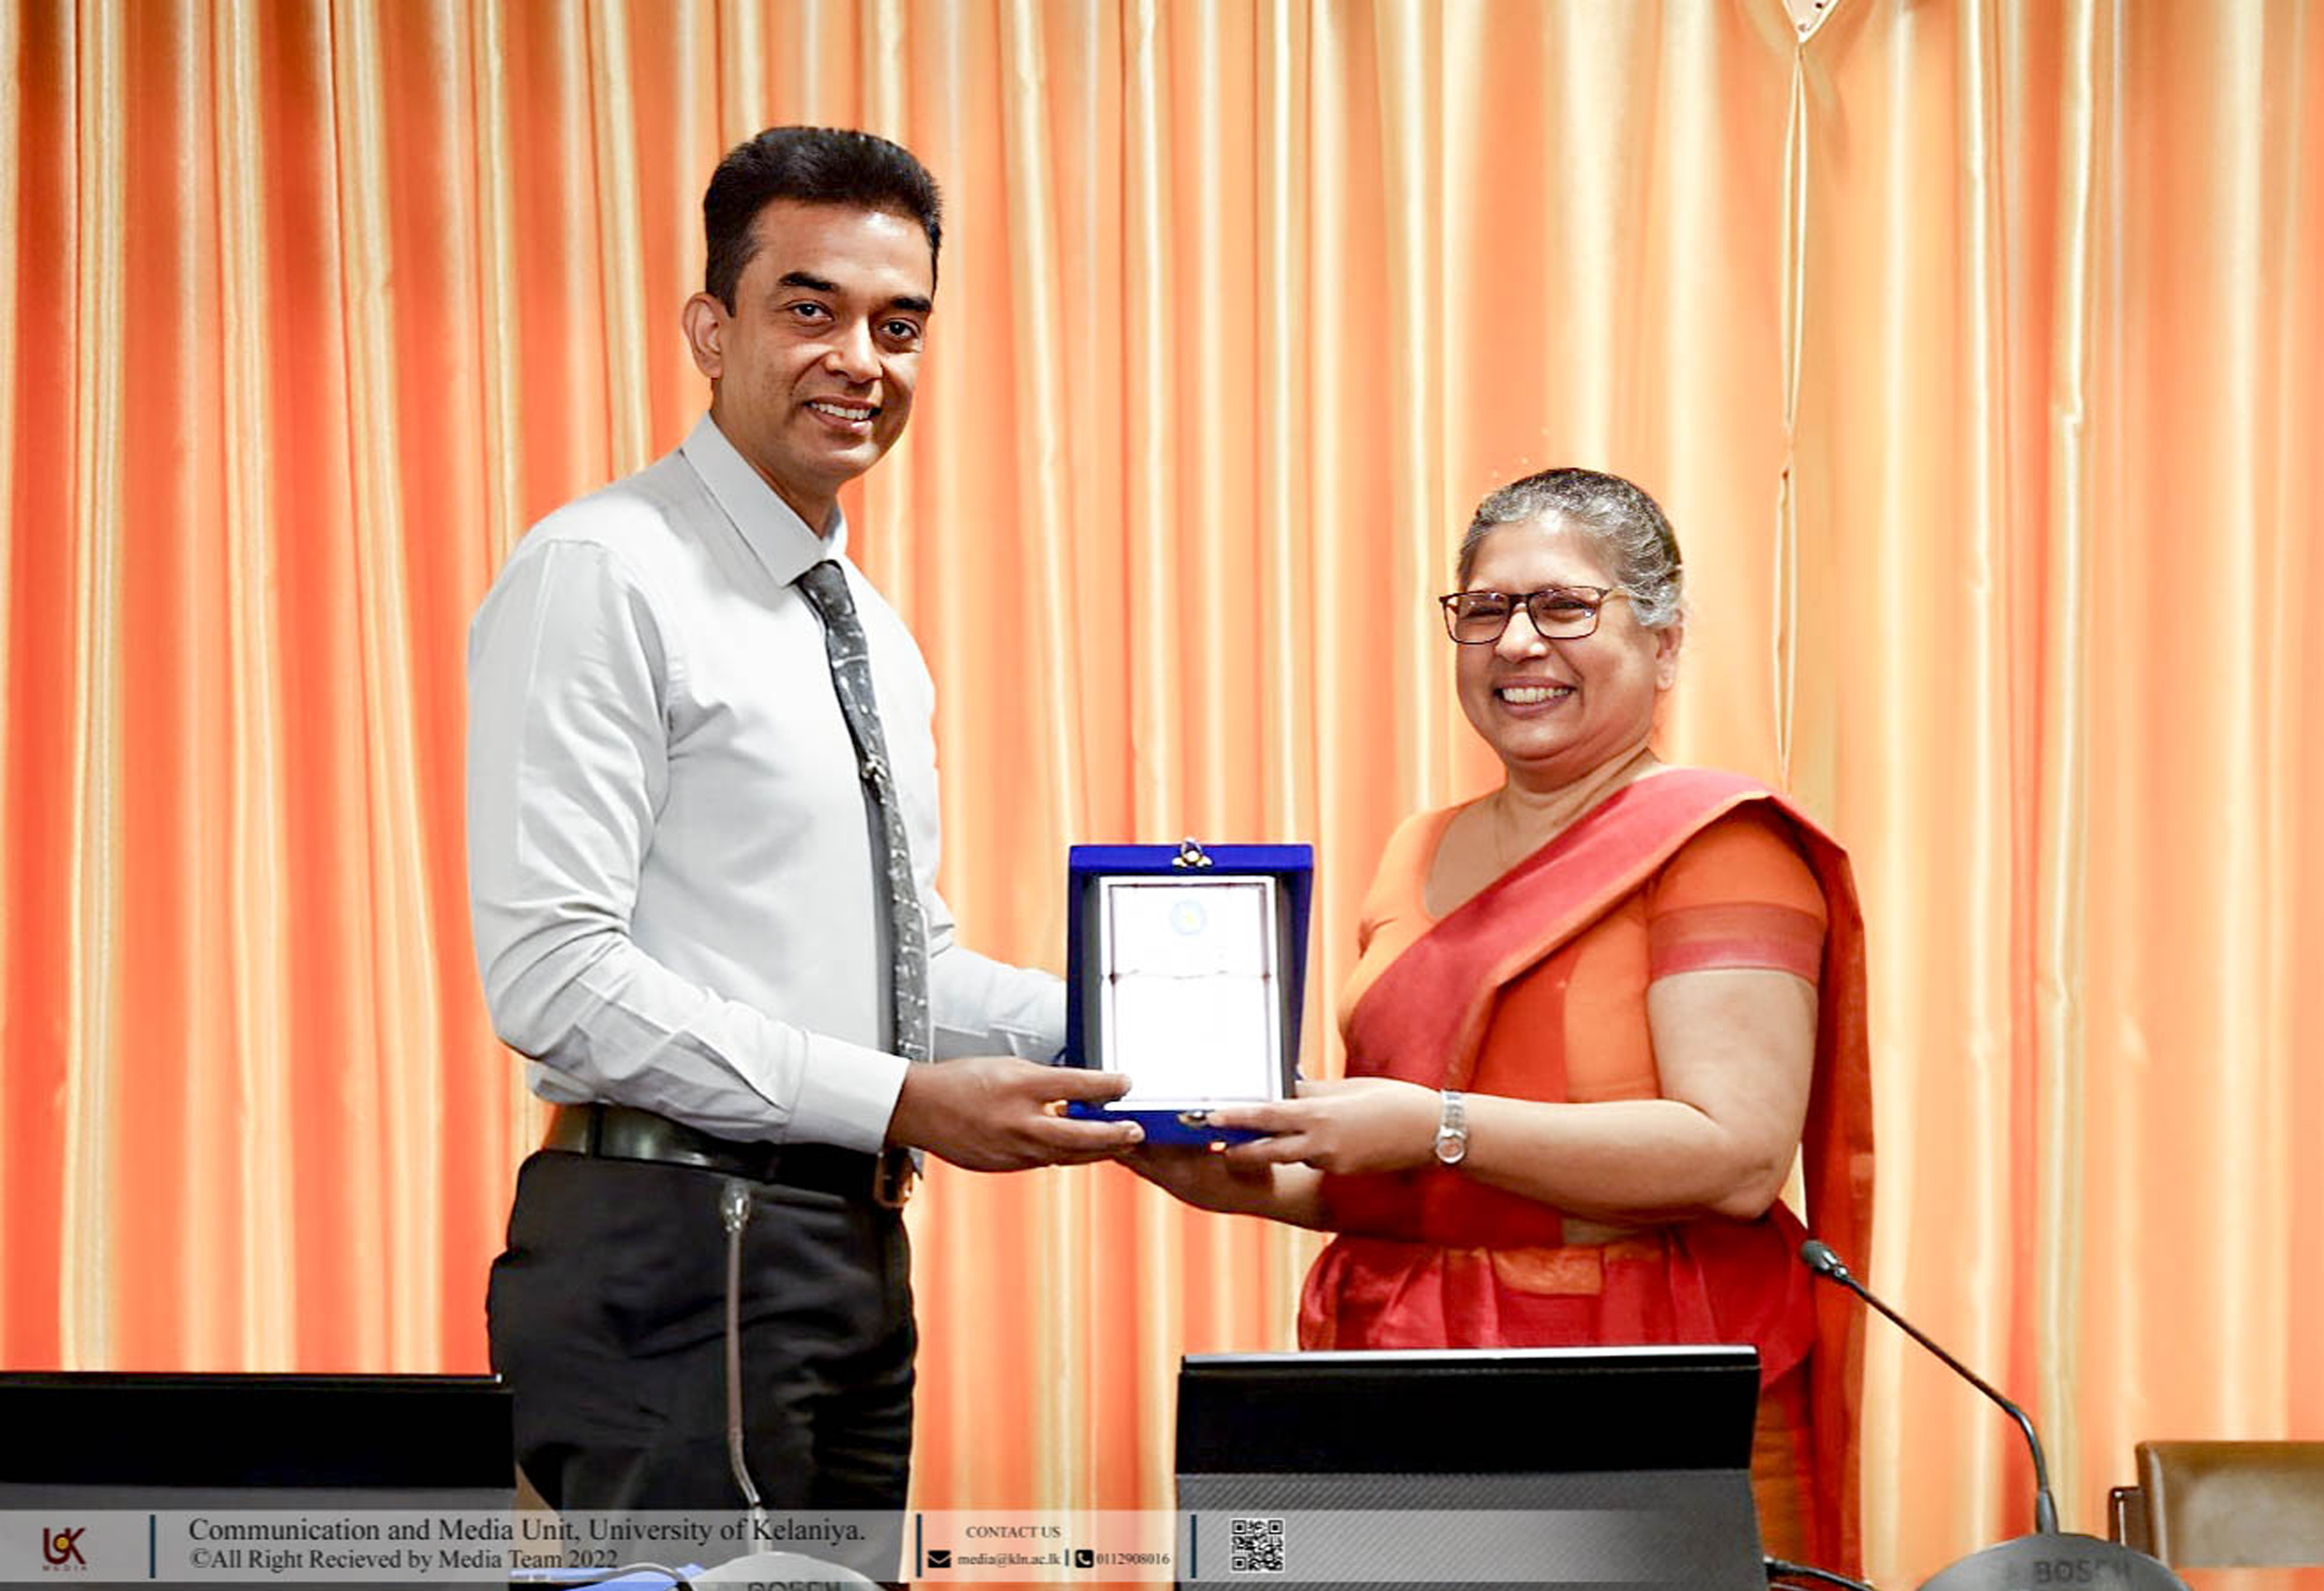 MoU Signed Between the Department of Sport Science and Physical Education of the University of Kelaniya and the Sri Lanka Taekwondo Federation (SLTF)